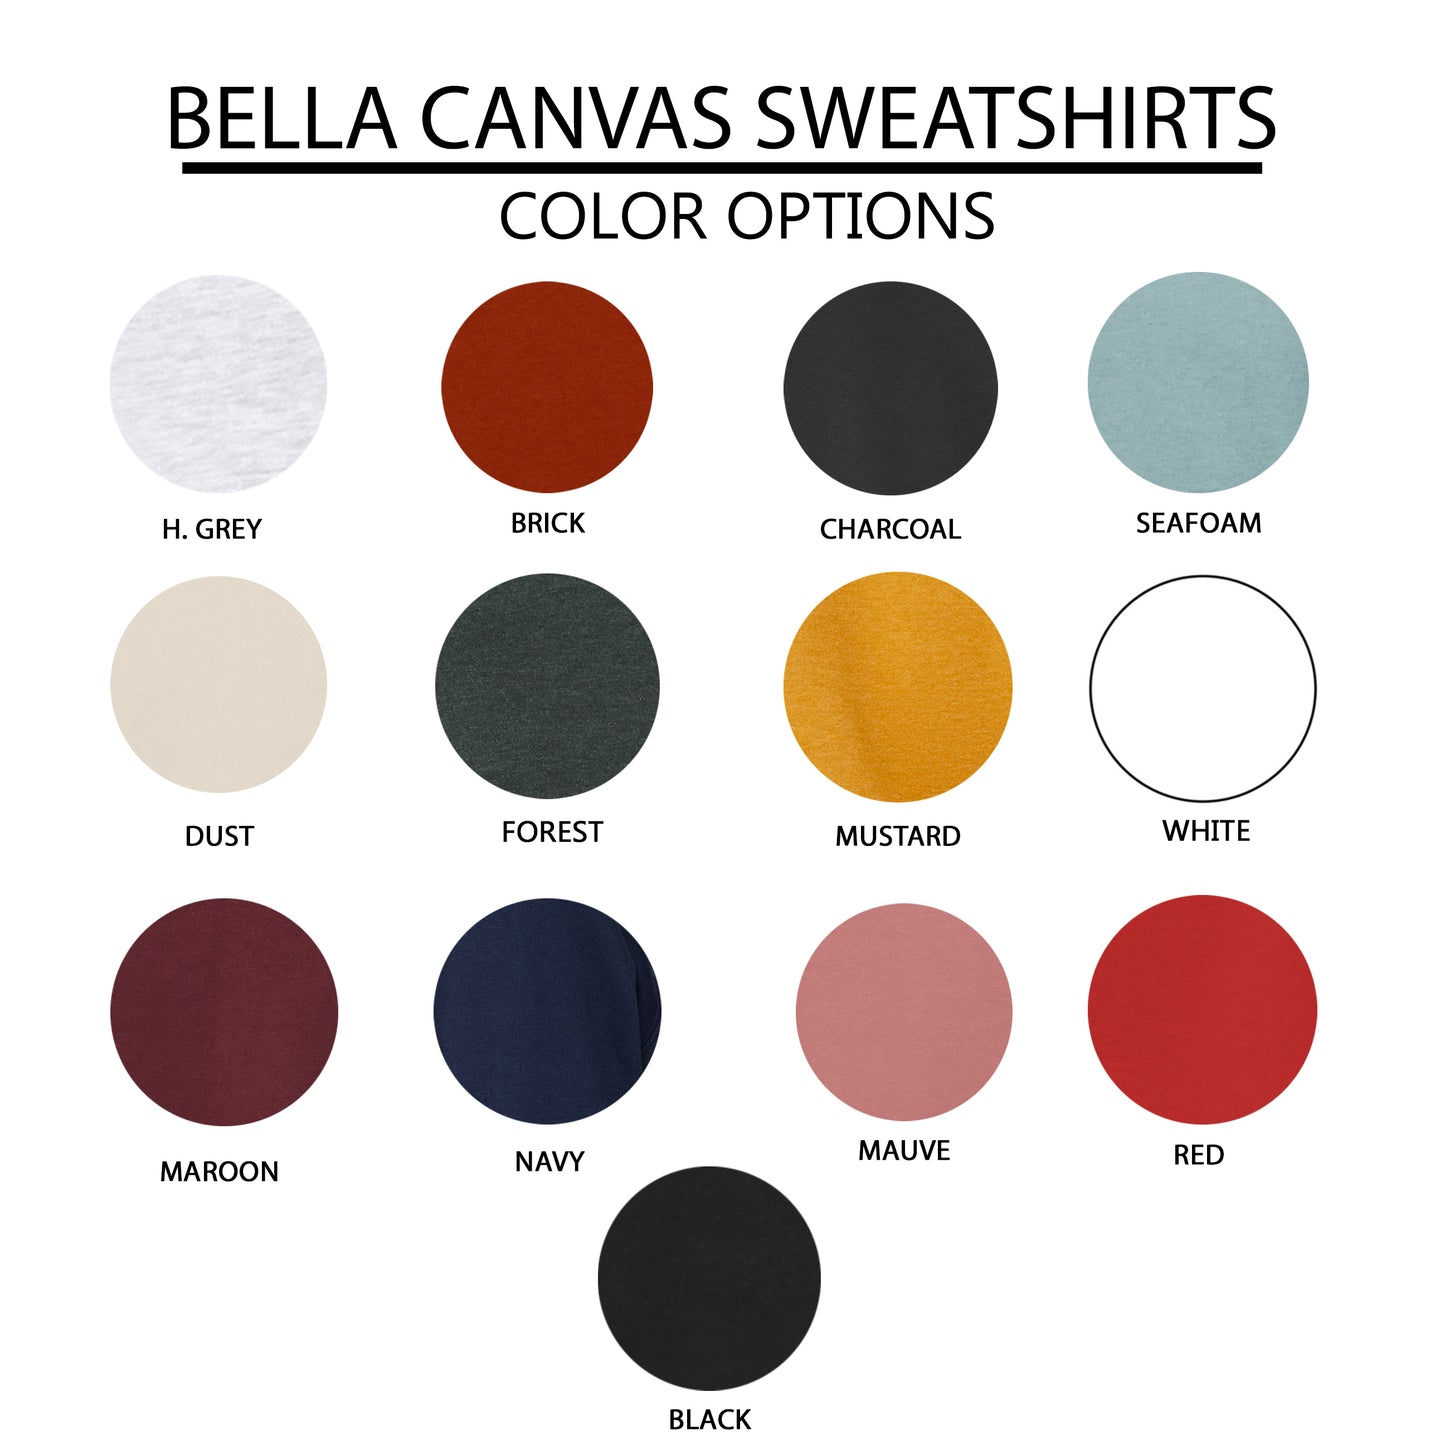 He Restores My Soul | Bella Canvas Premium Sweatshirt